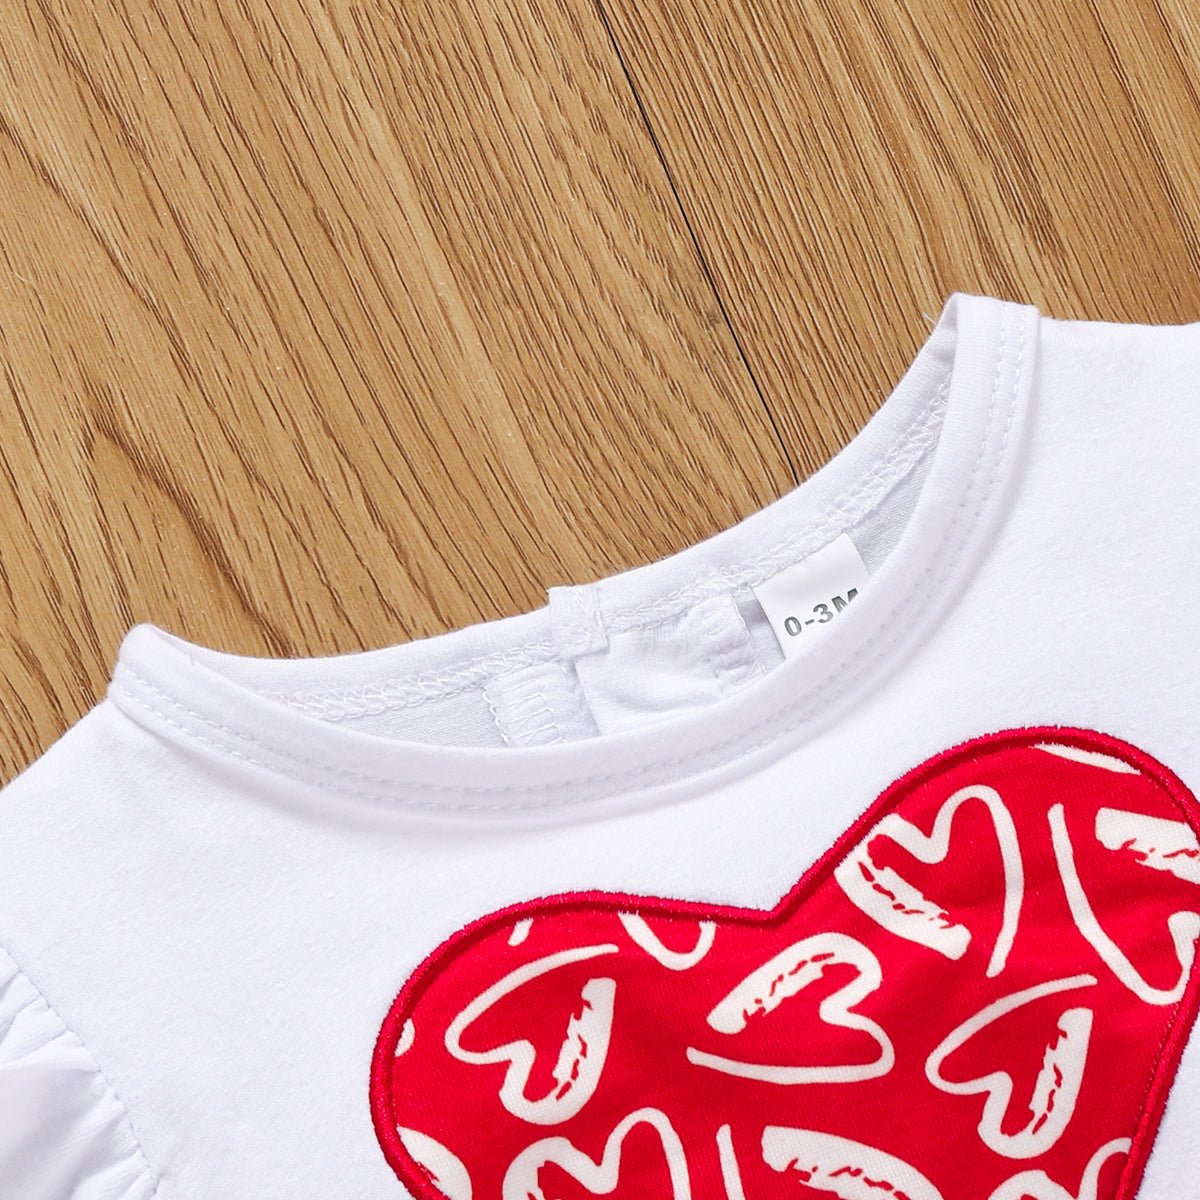 LITTLE GIRLS Valentine's Day Baby Heart Graphic Tulle Bodysuit Dress SZ 0M-12M